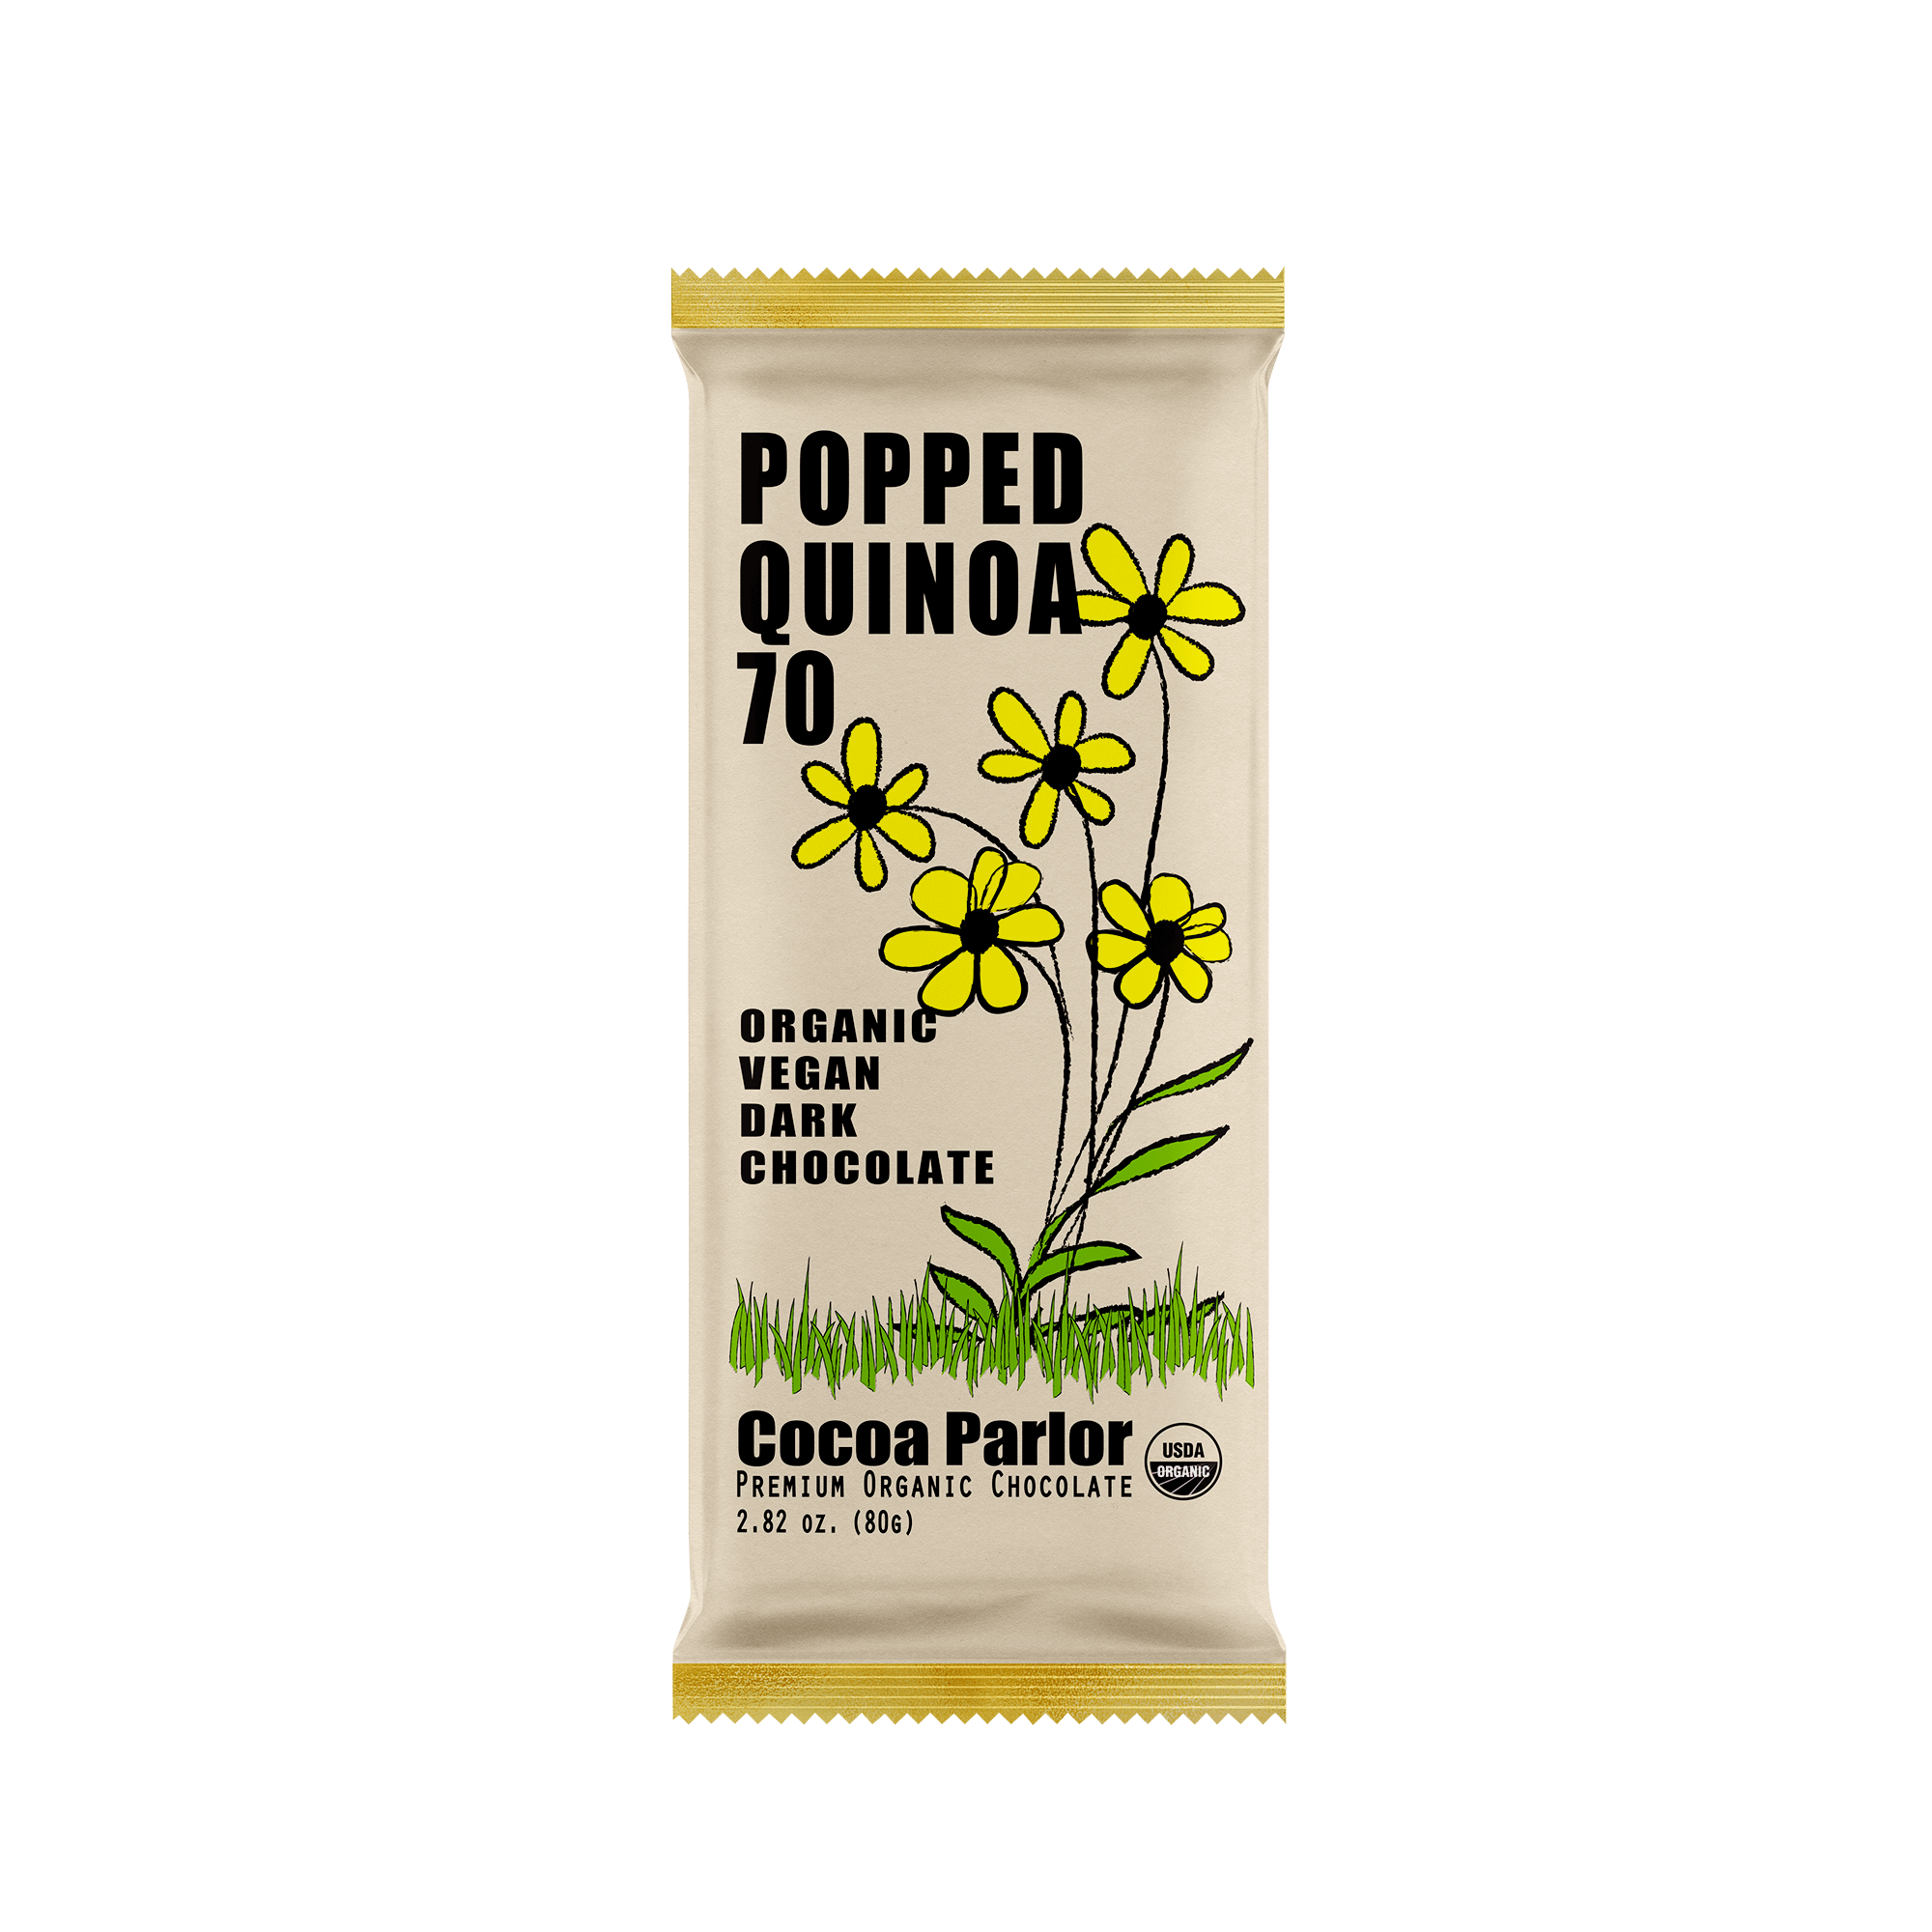 Popped Quinoa 70